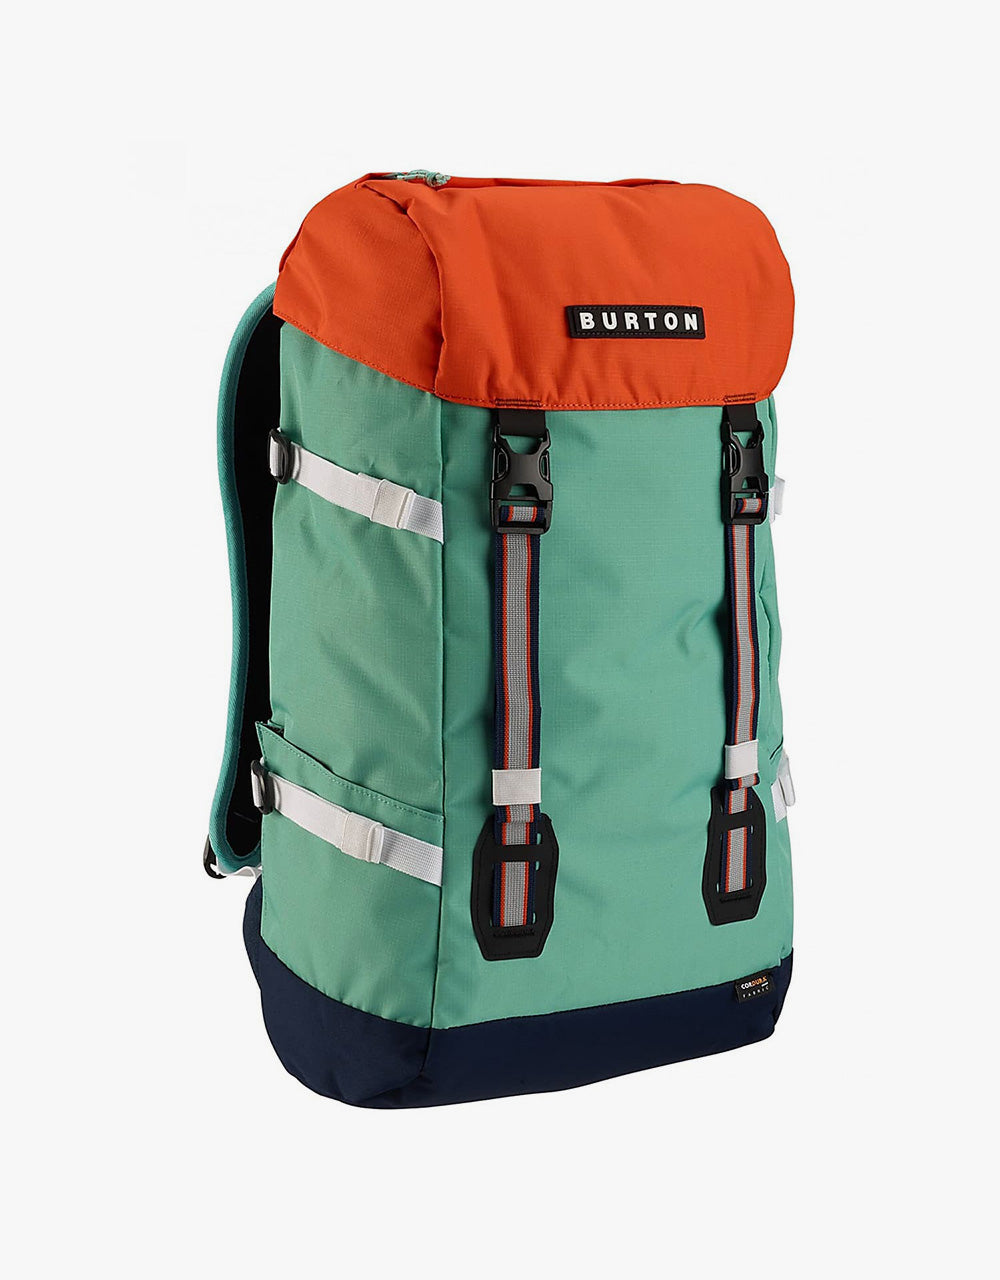 Burton Tinder 2.0 30L Backpack - Buoy Blue Triple Ripstop Cordura